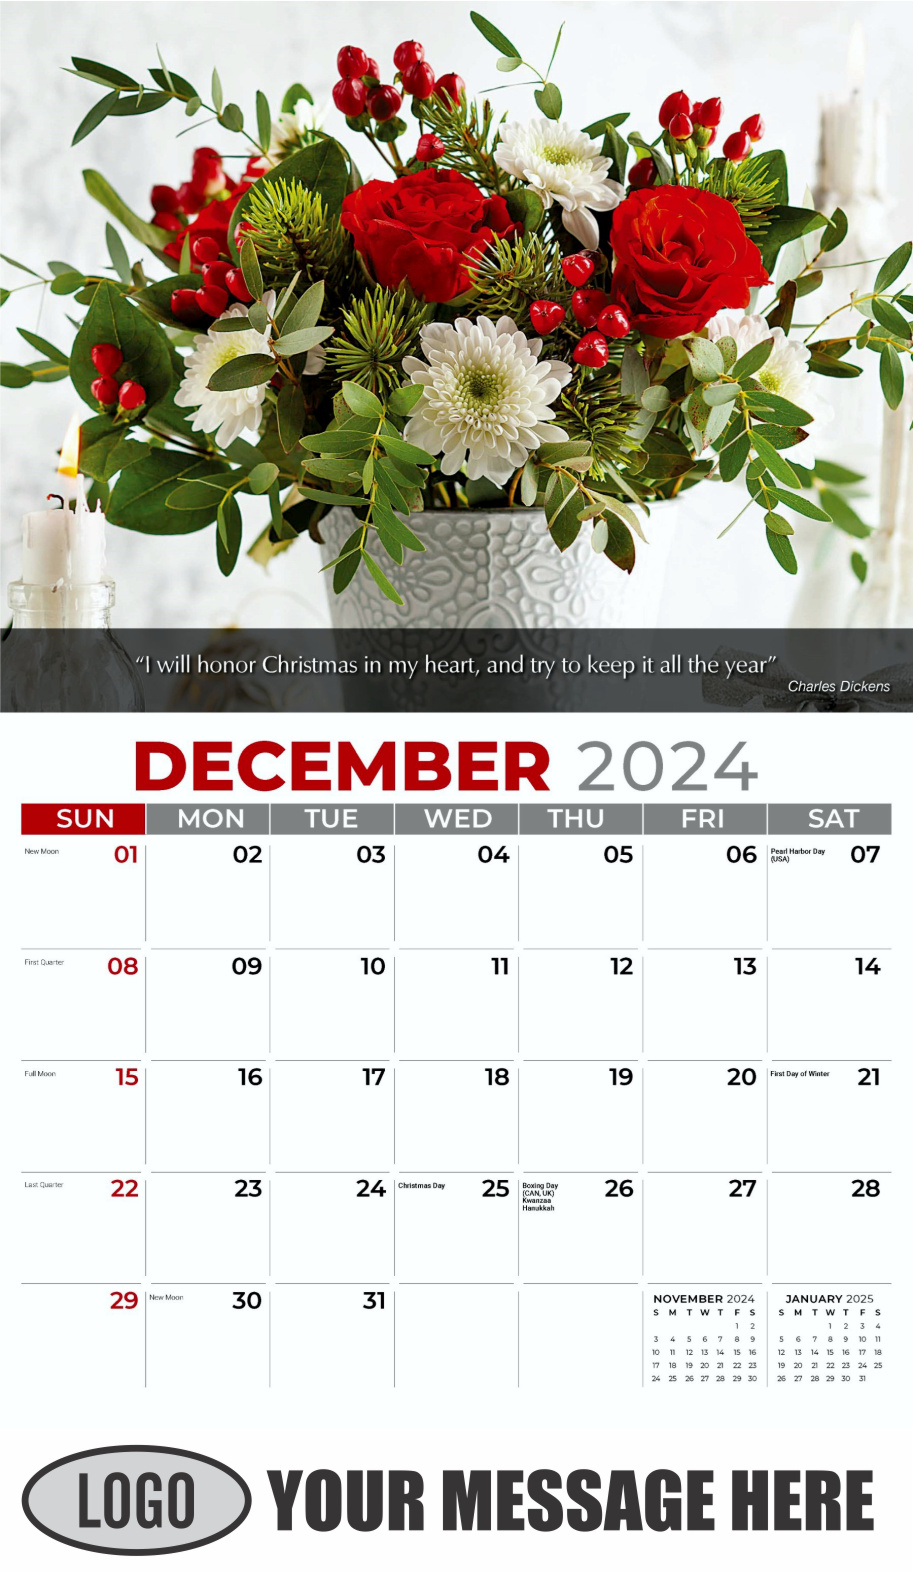 Flowers and Gardens 2024 Business Advertising Calendar - December